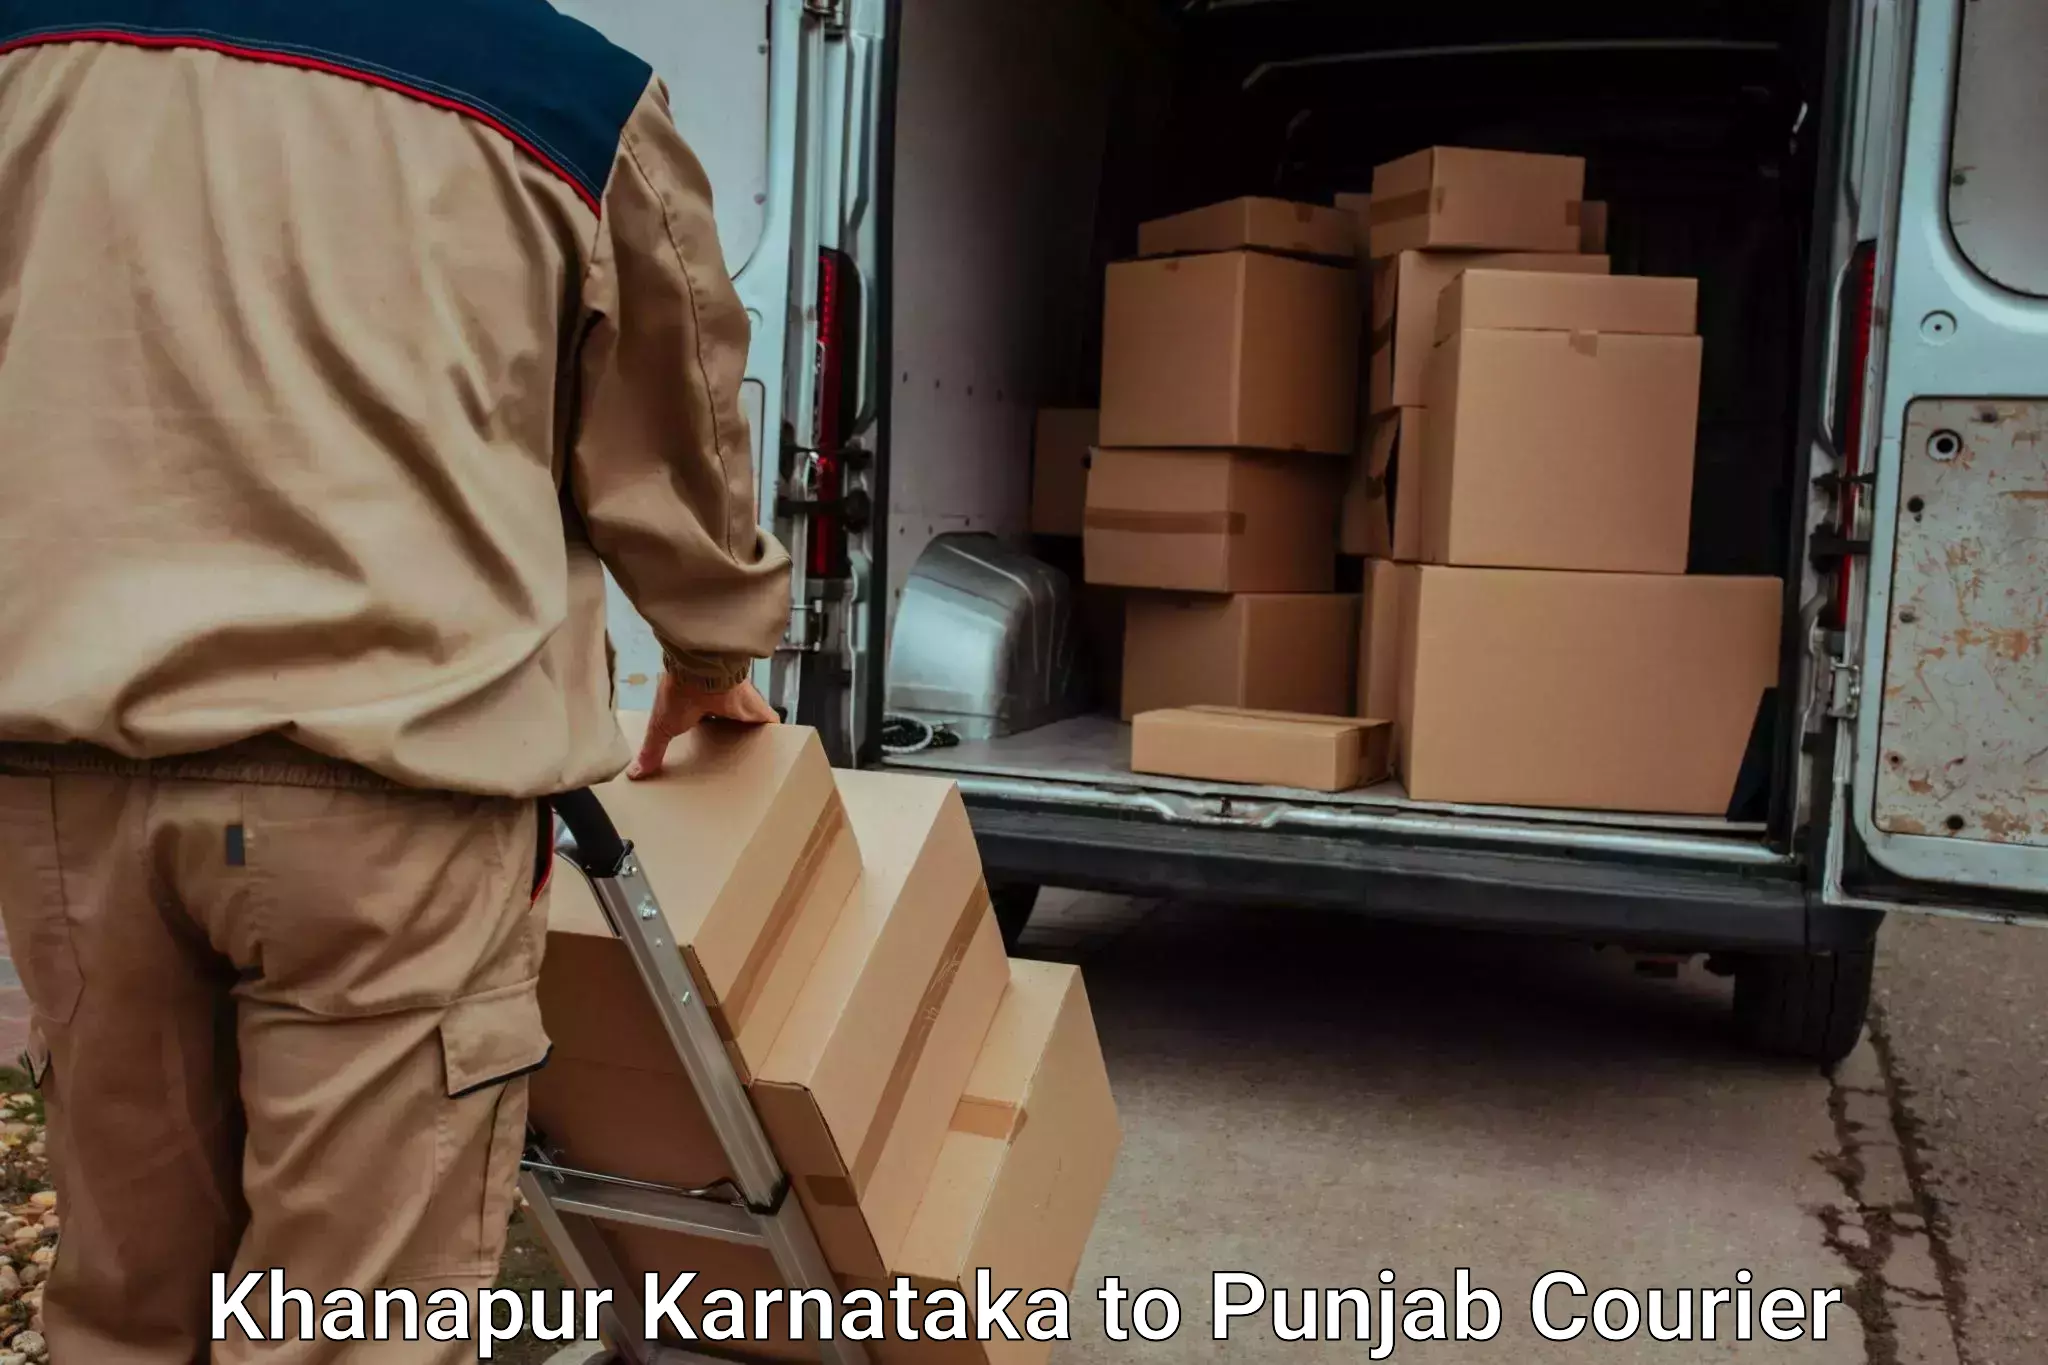 Full-service household moving in Khanapur Karnataka to Punjab